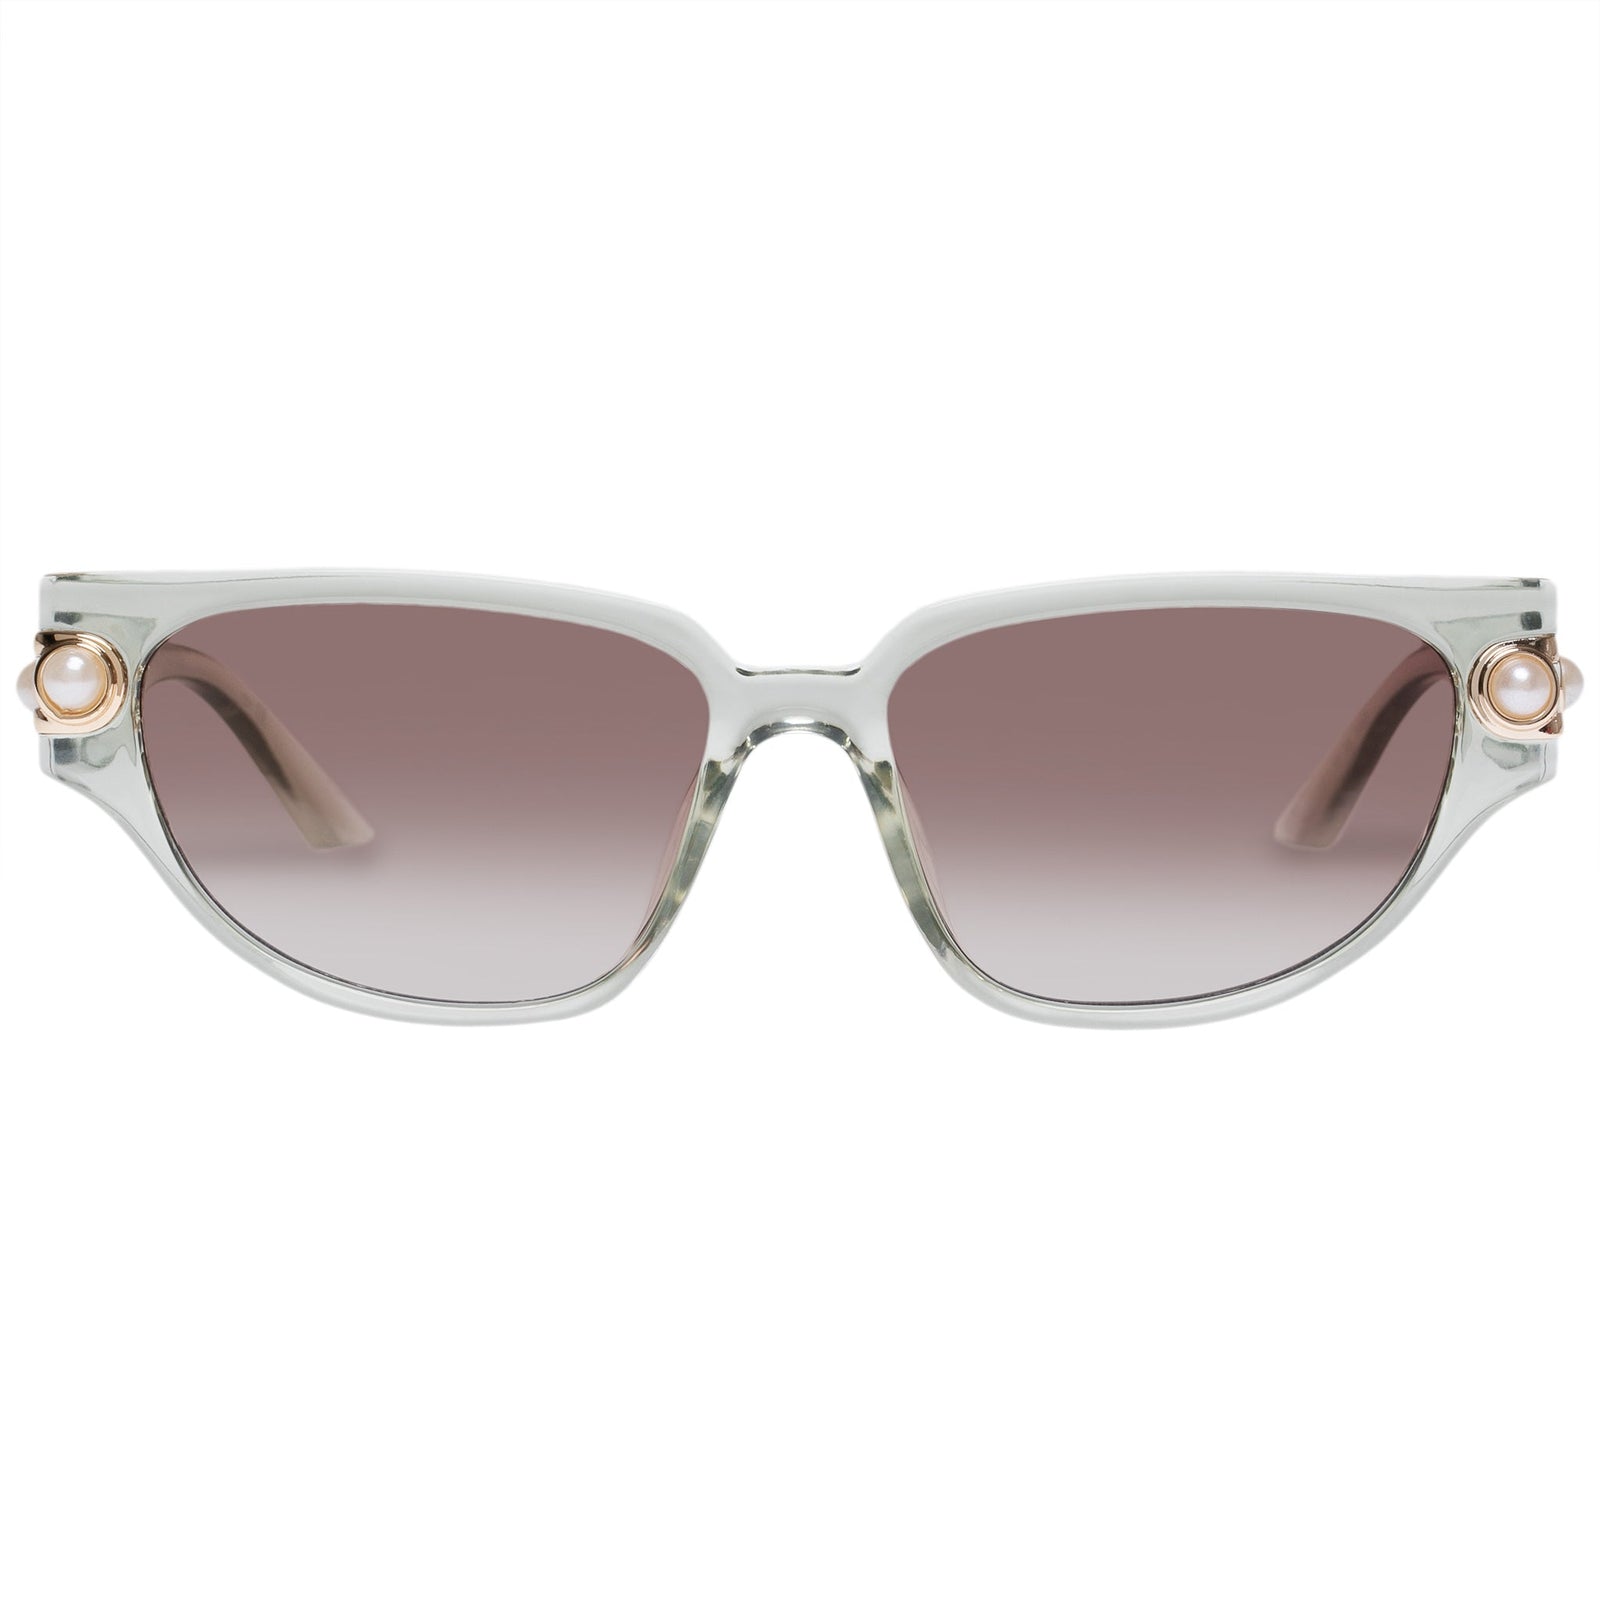 Share 271+ pearl frame sunglasses best